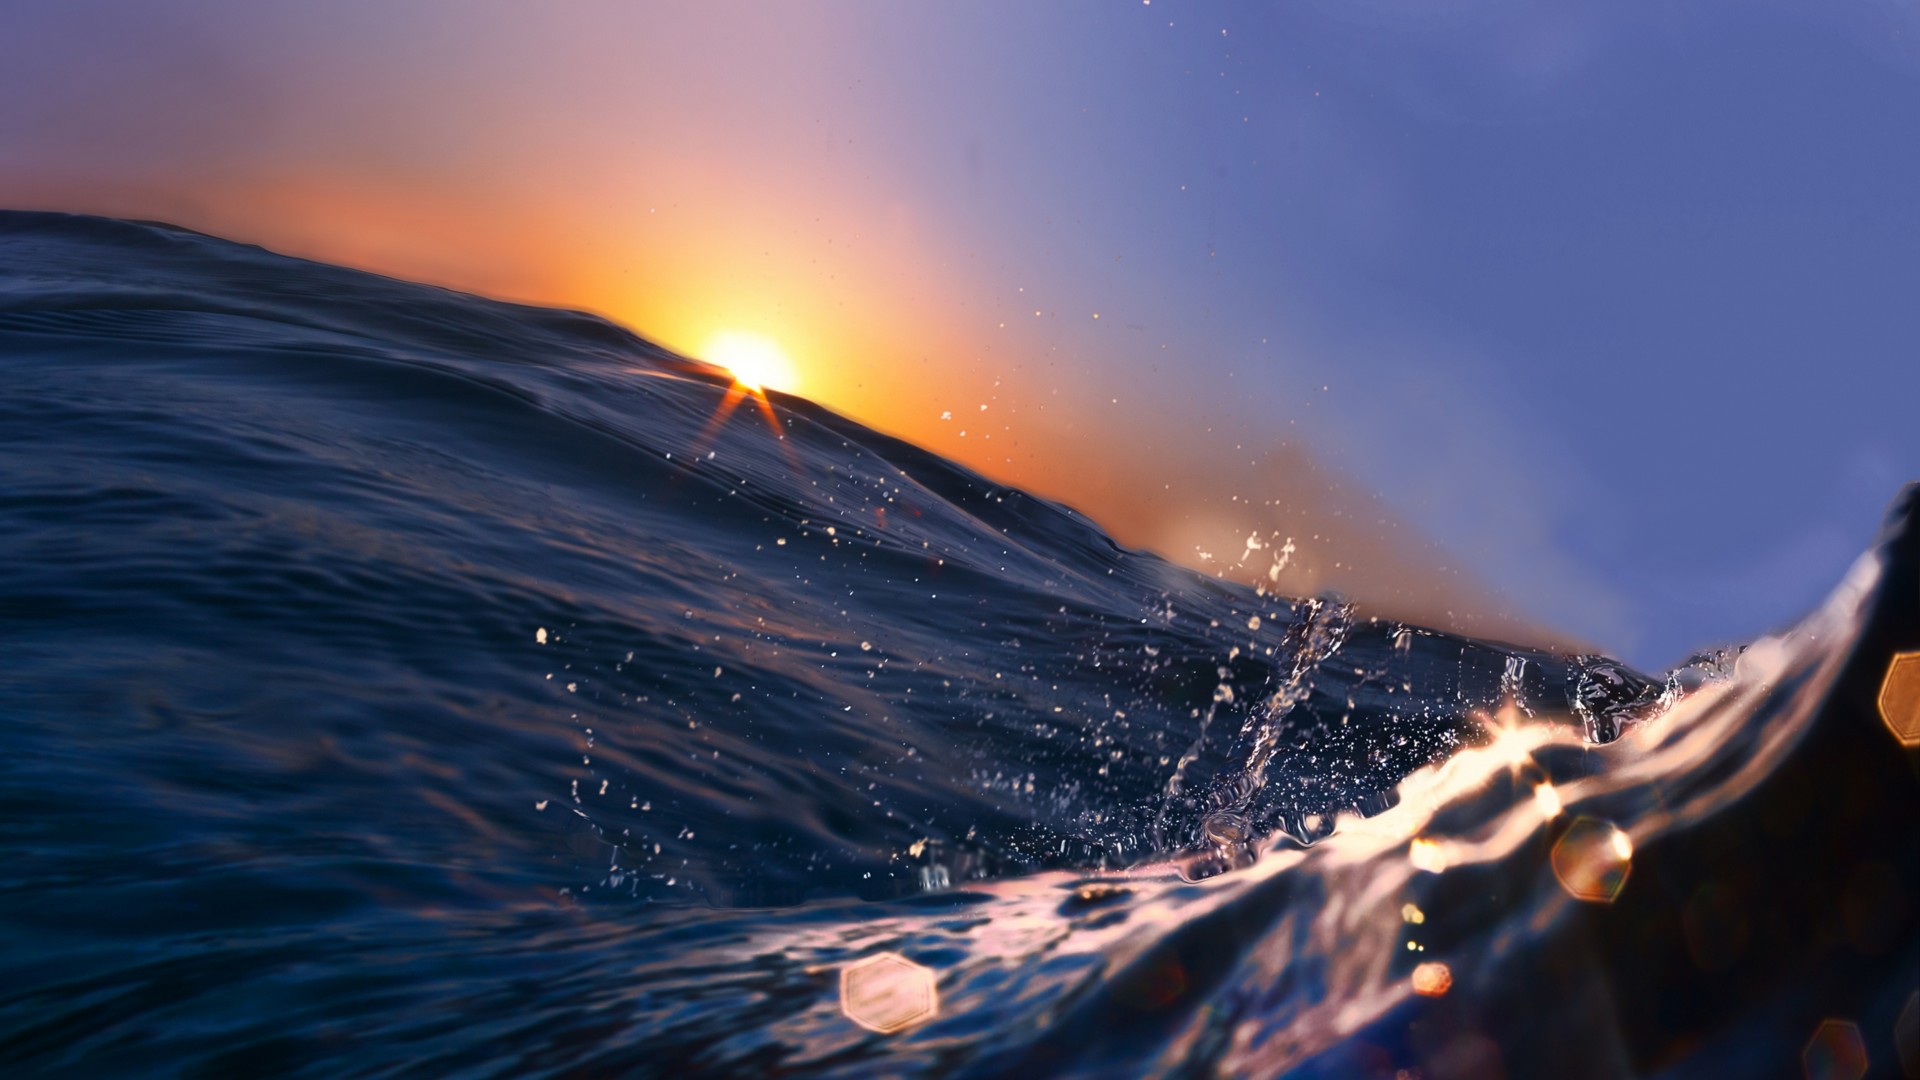 море, 5k, 4k, 8k, океан, вода, рассвет, закат, солнце, лучи, синий, Sea, 5k, 4k wallpaper, 8k, Ocean, Water, sunset, sunrise, blue, rays (horizontal)